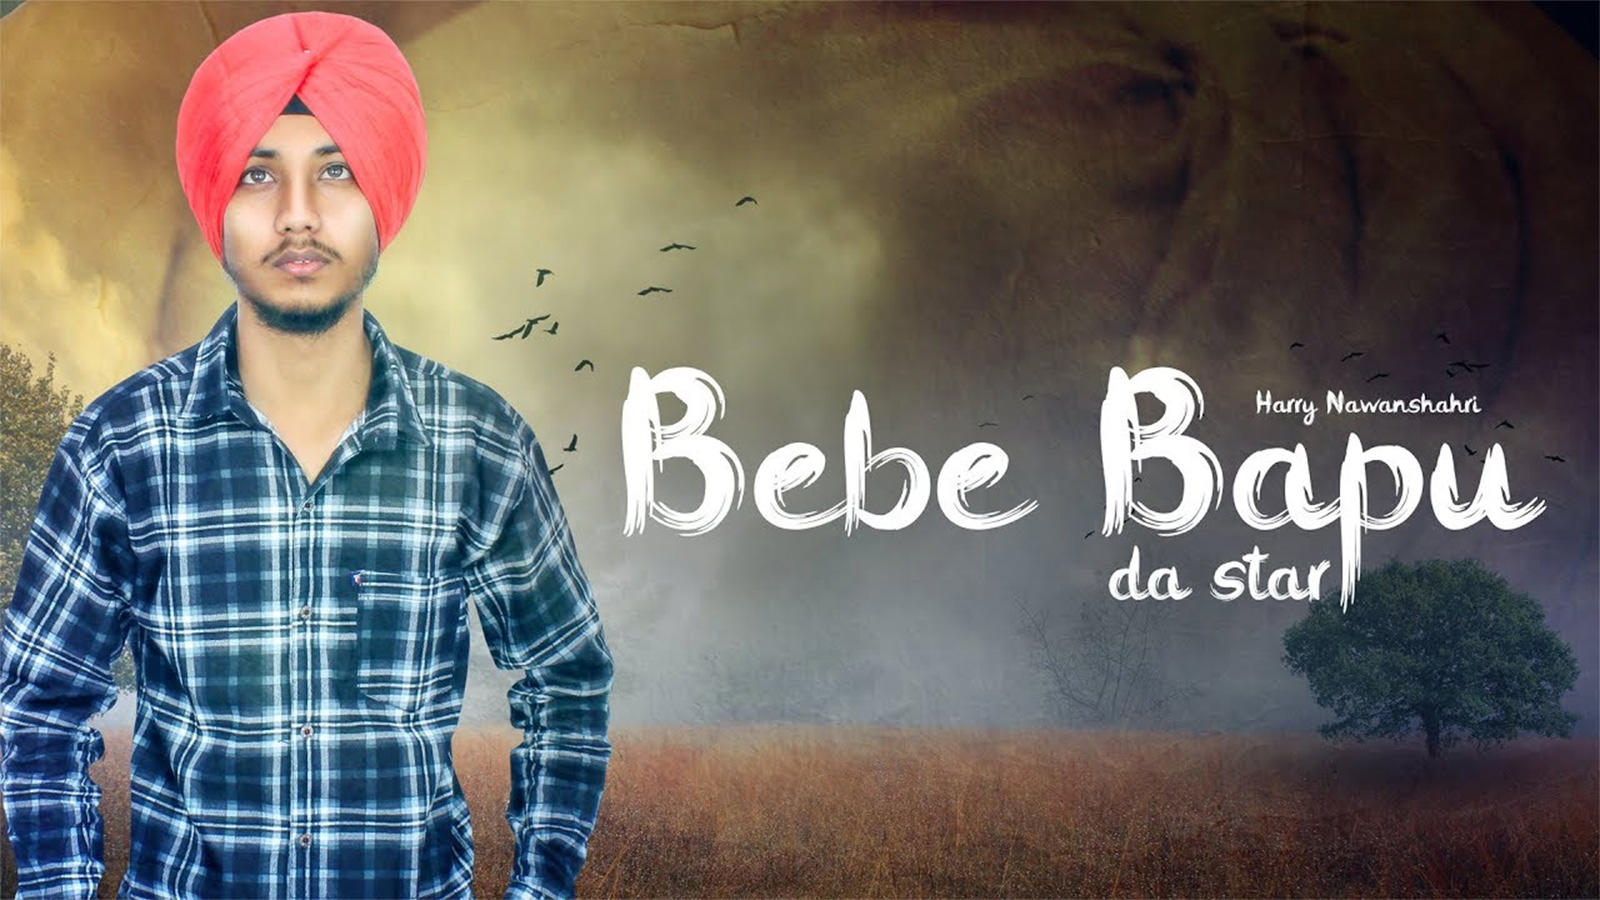 Latest Punjabi Song Bebe Bapu Da Star Sung By Harry Nawanshahri Punjabi Video Songs Times Of India